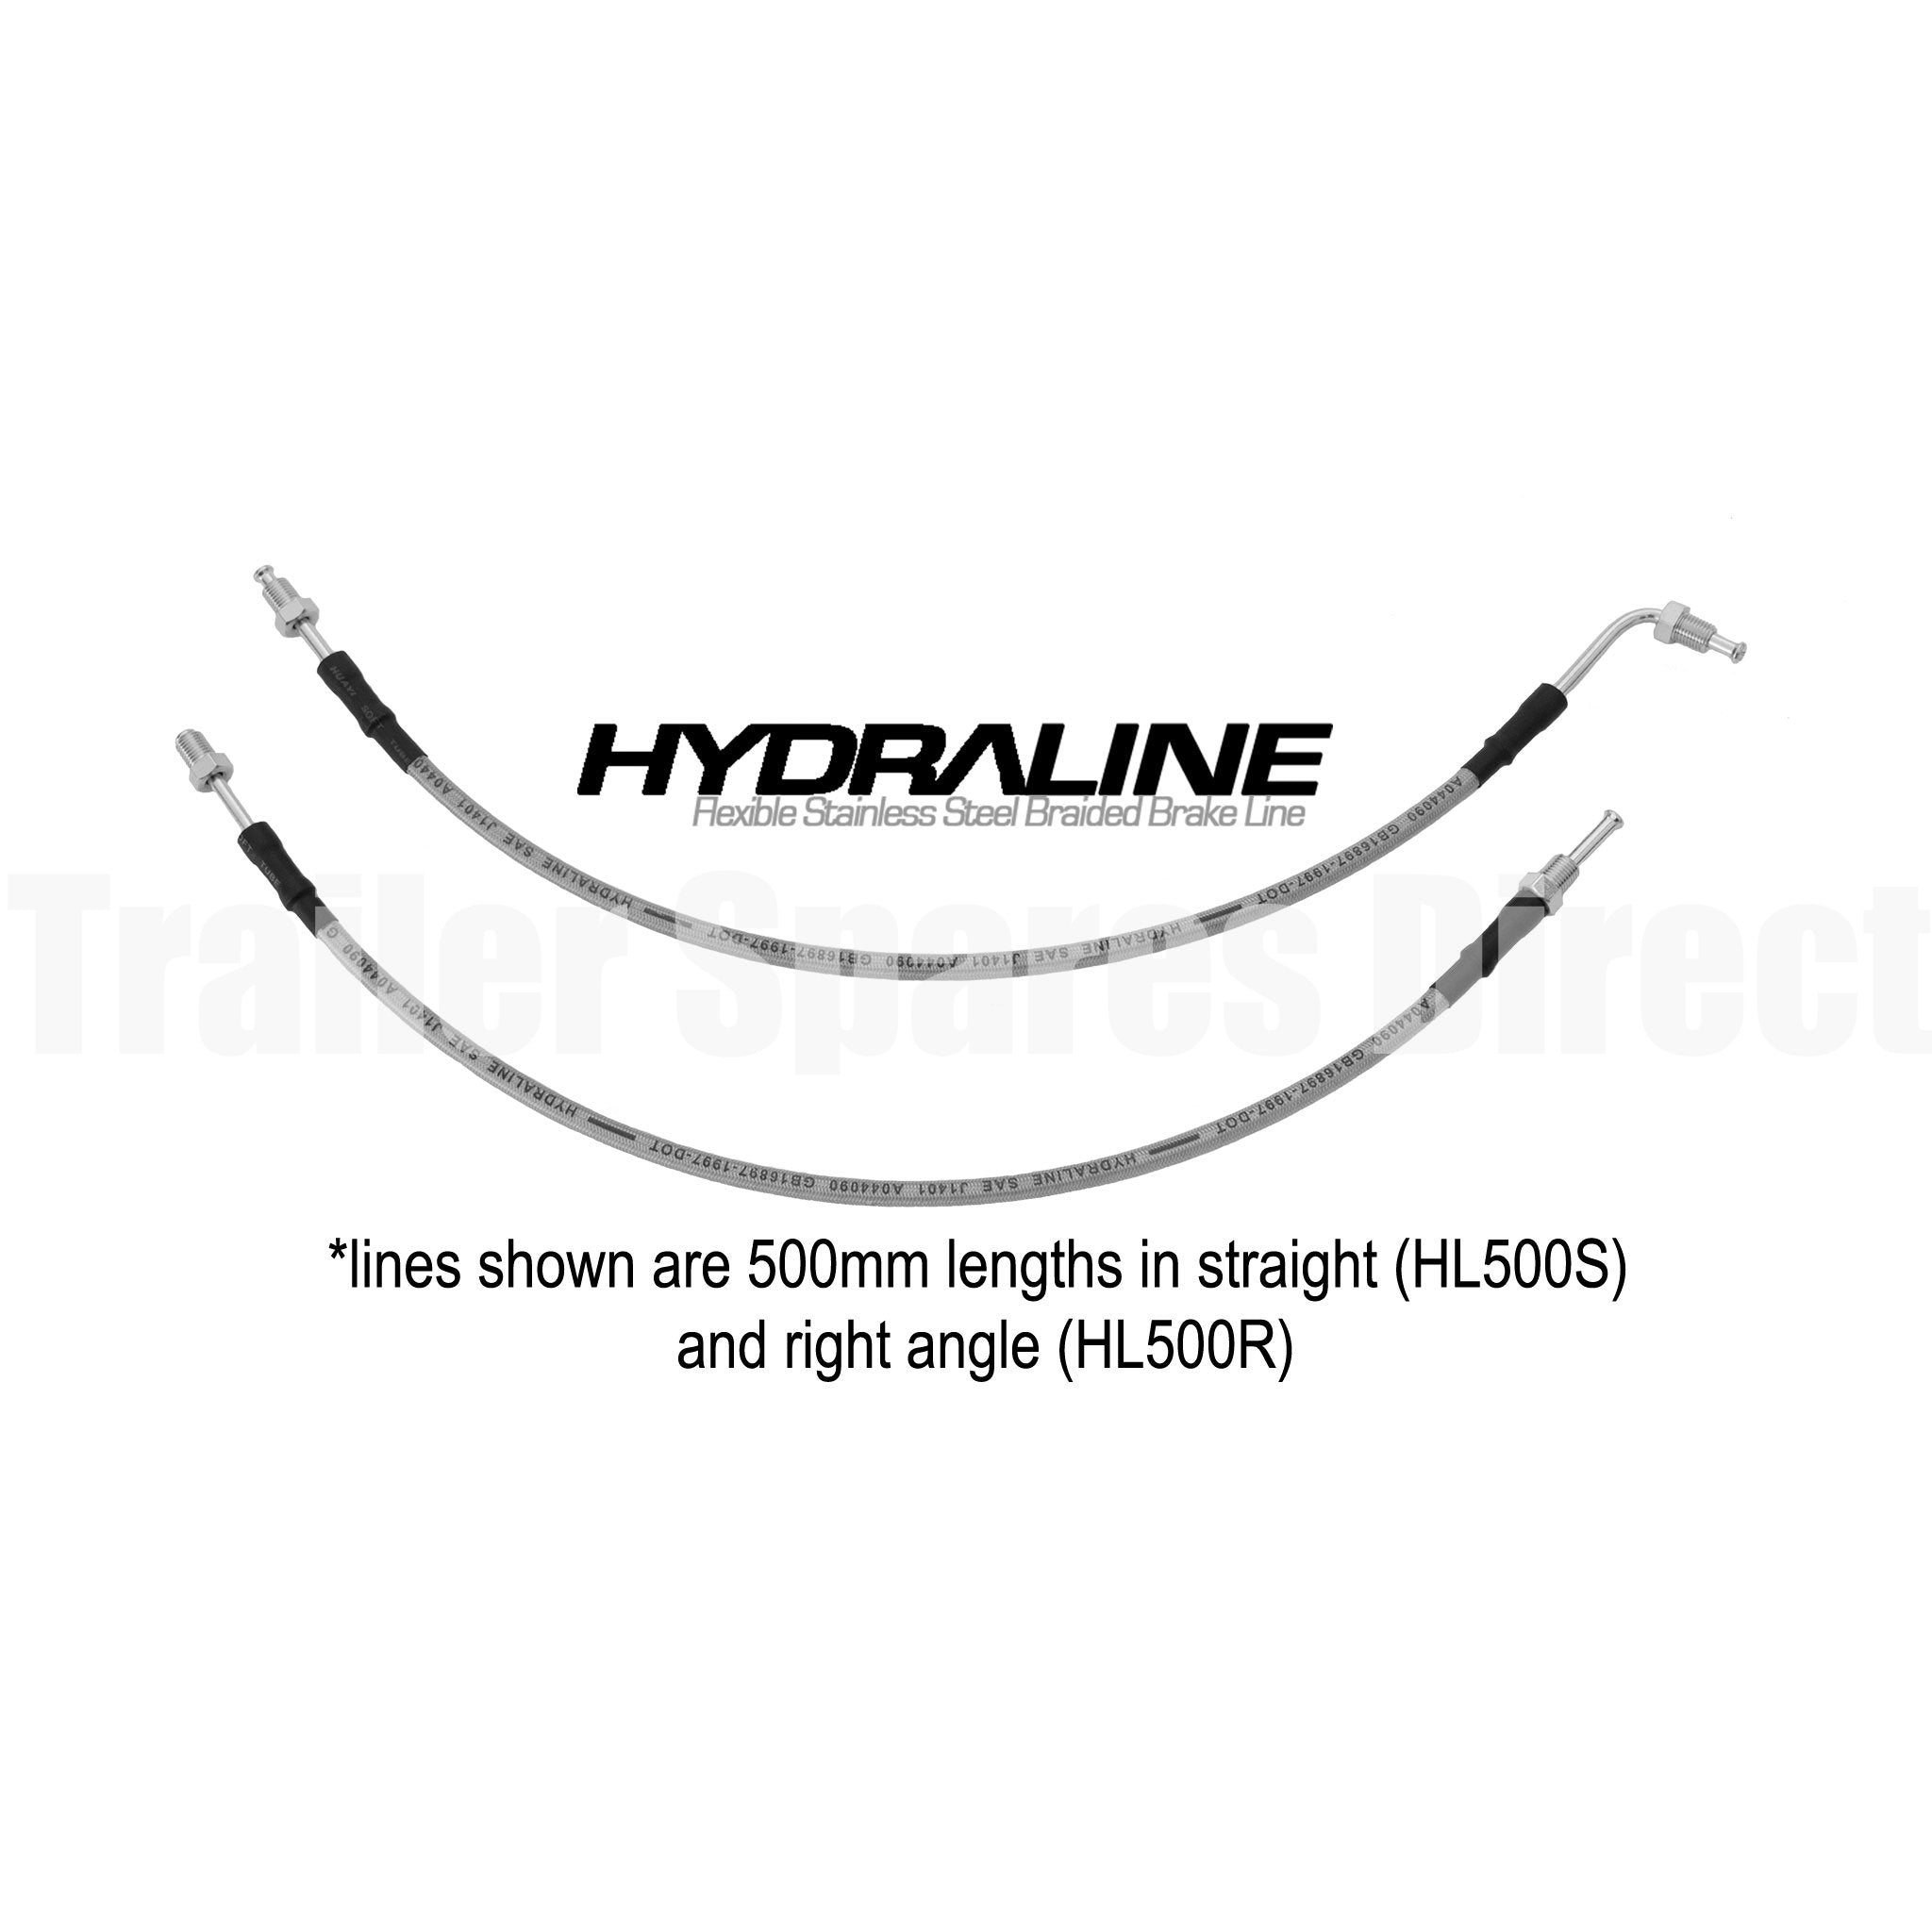 6500mm HydraLine brake hose